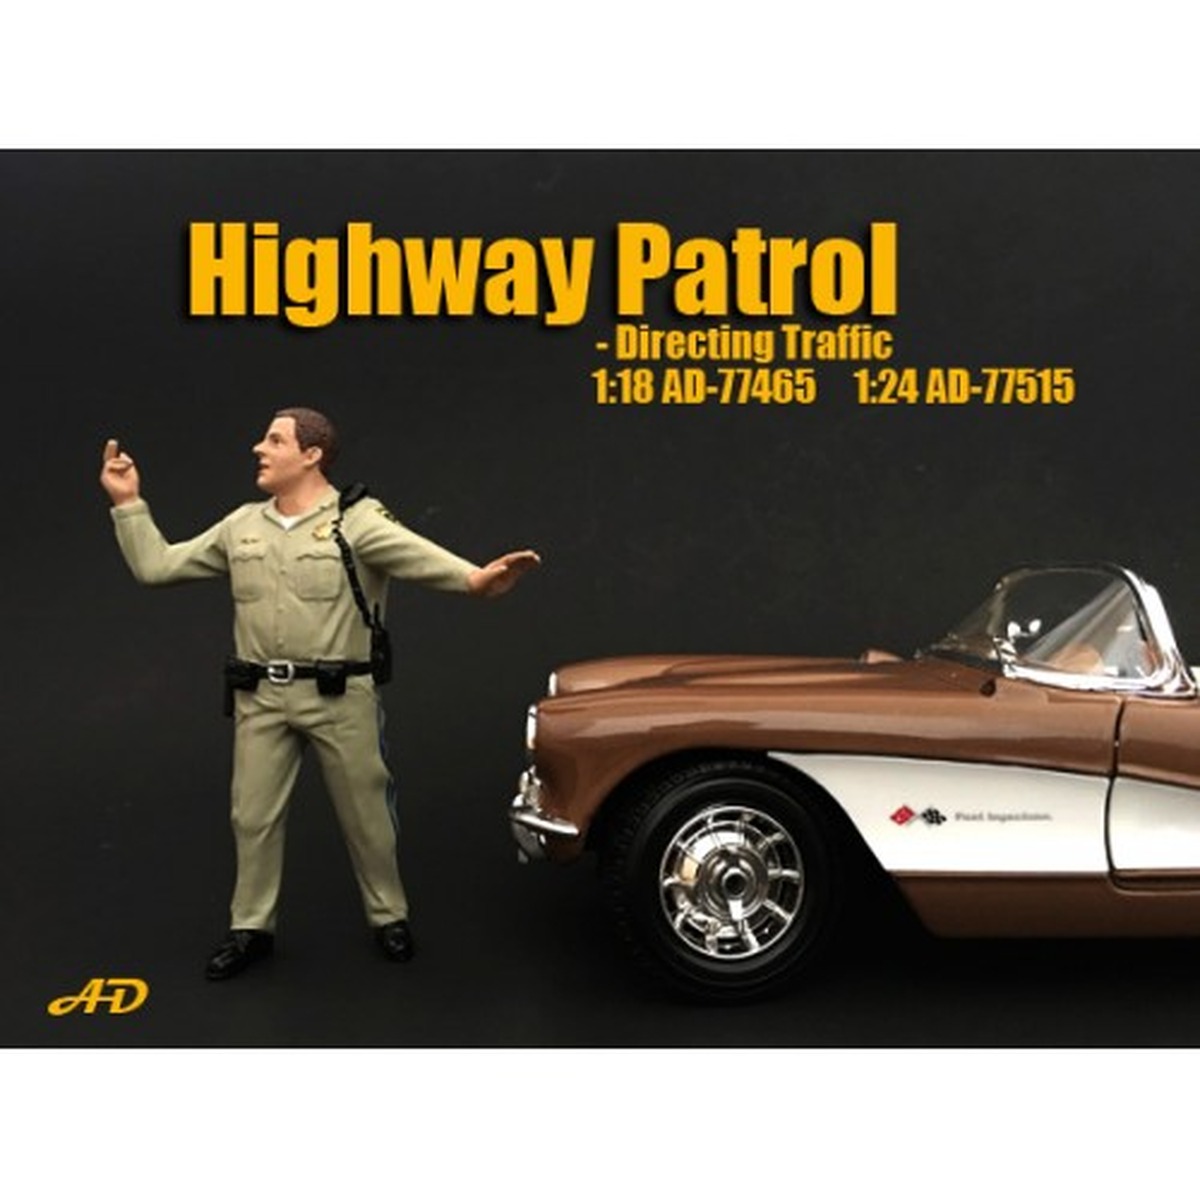 1:24 Scale American Diorama Highway Patrol